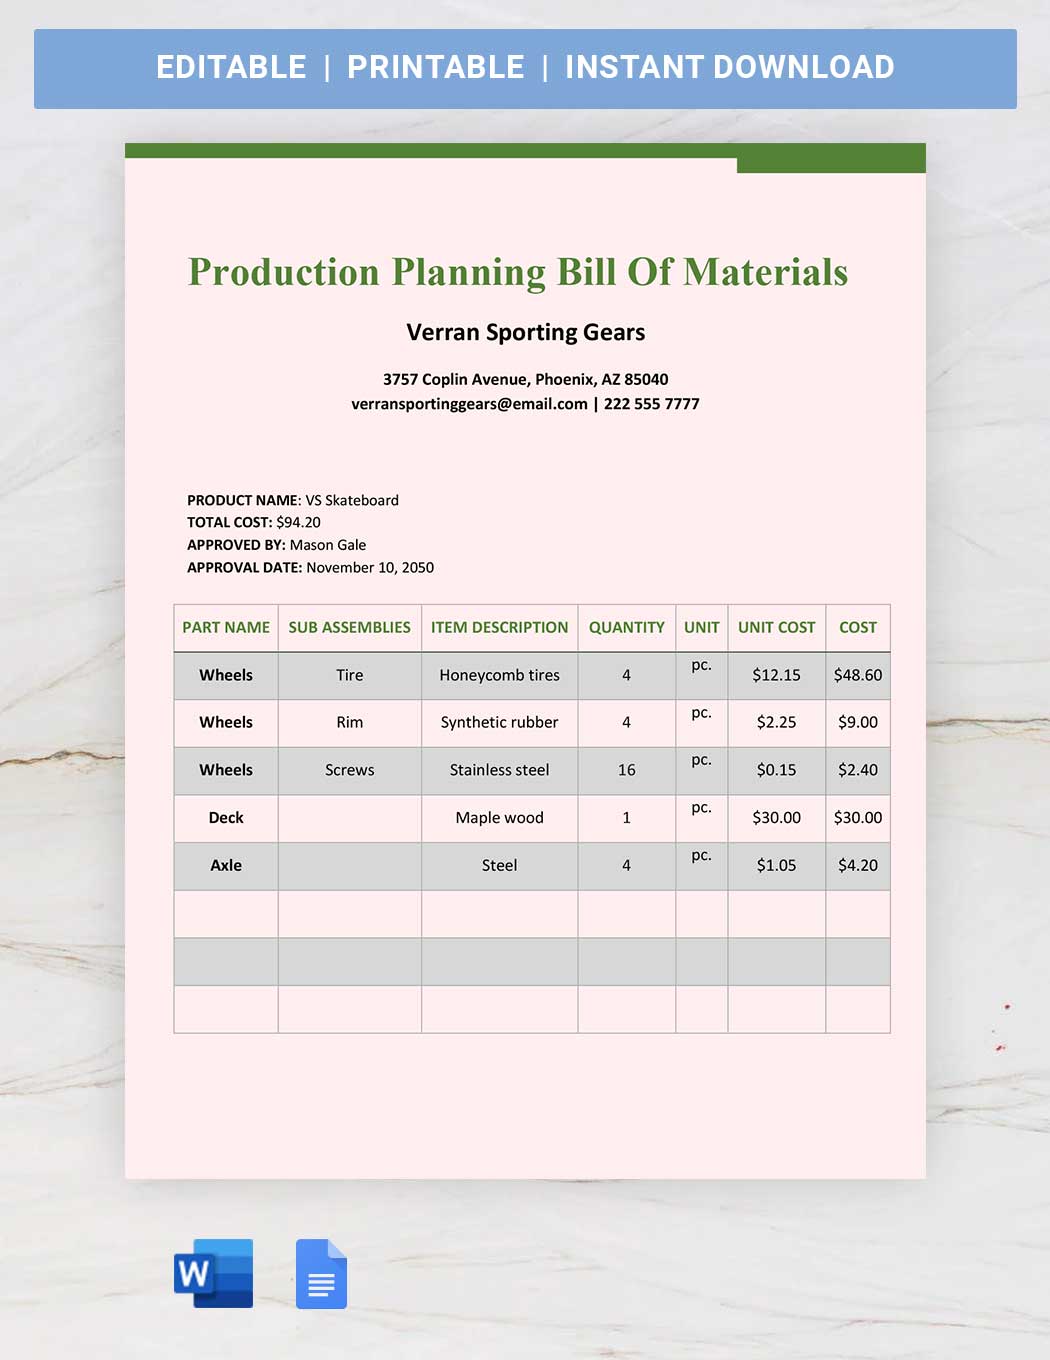 Production Planning Bill Of Materials